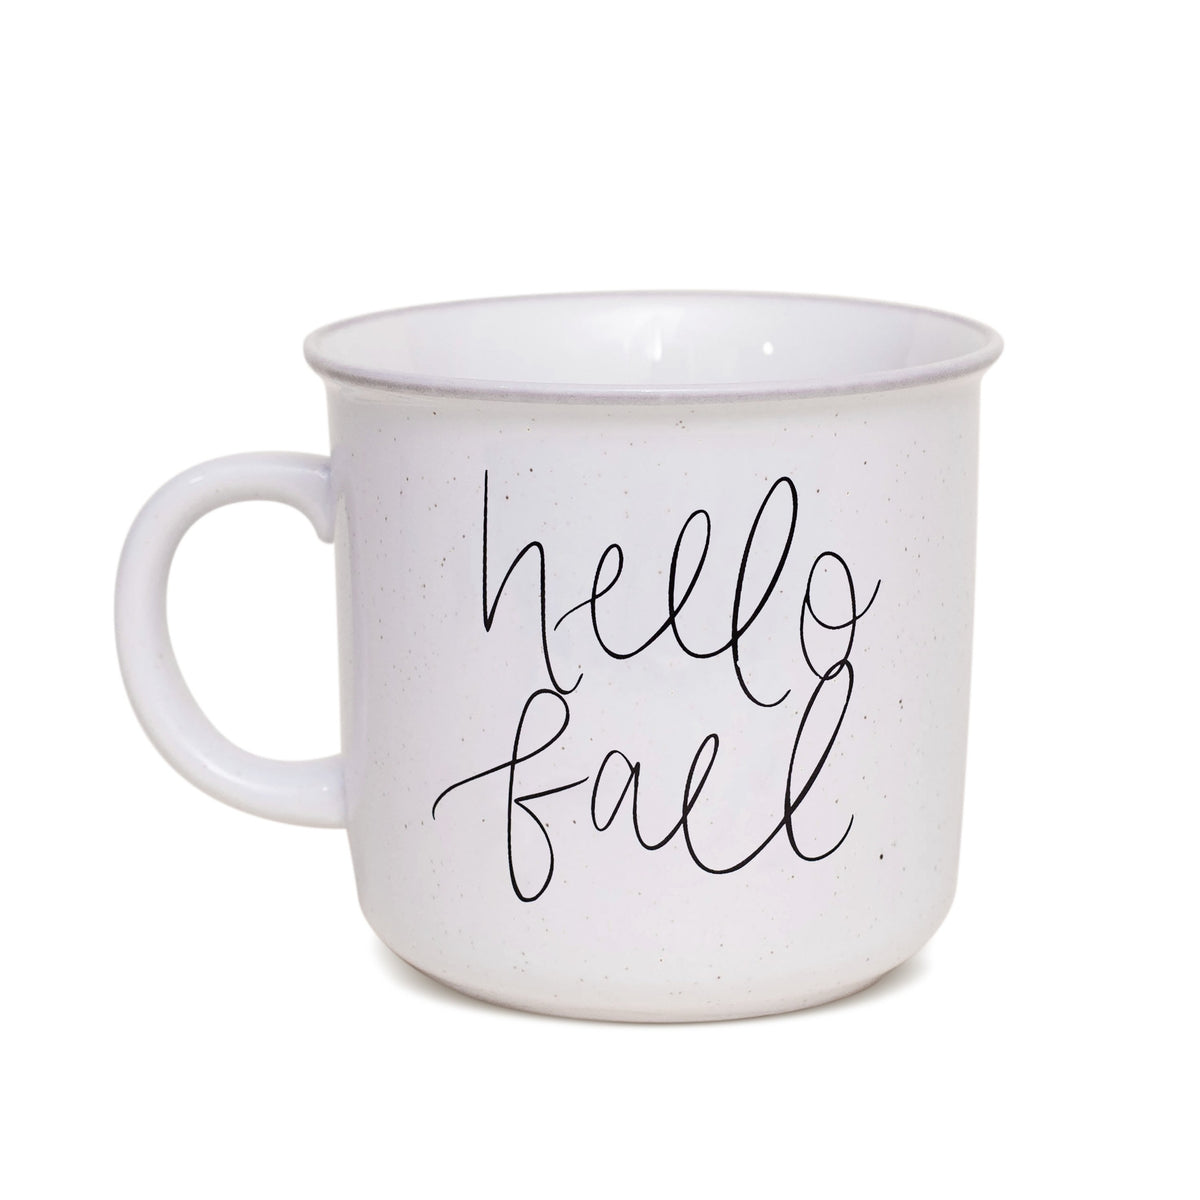 Hello Fall Mug